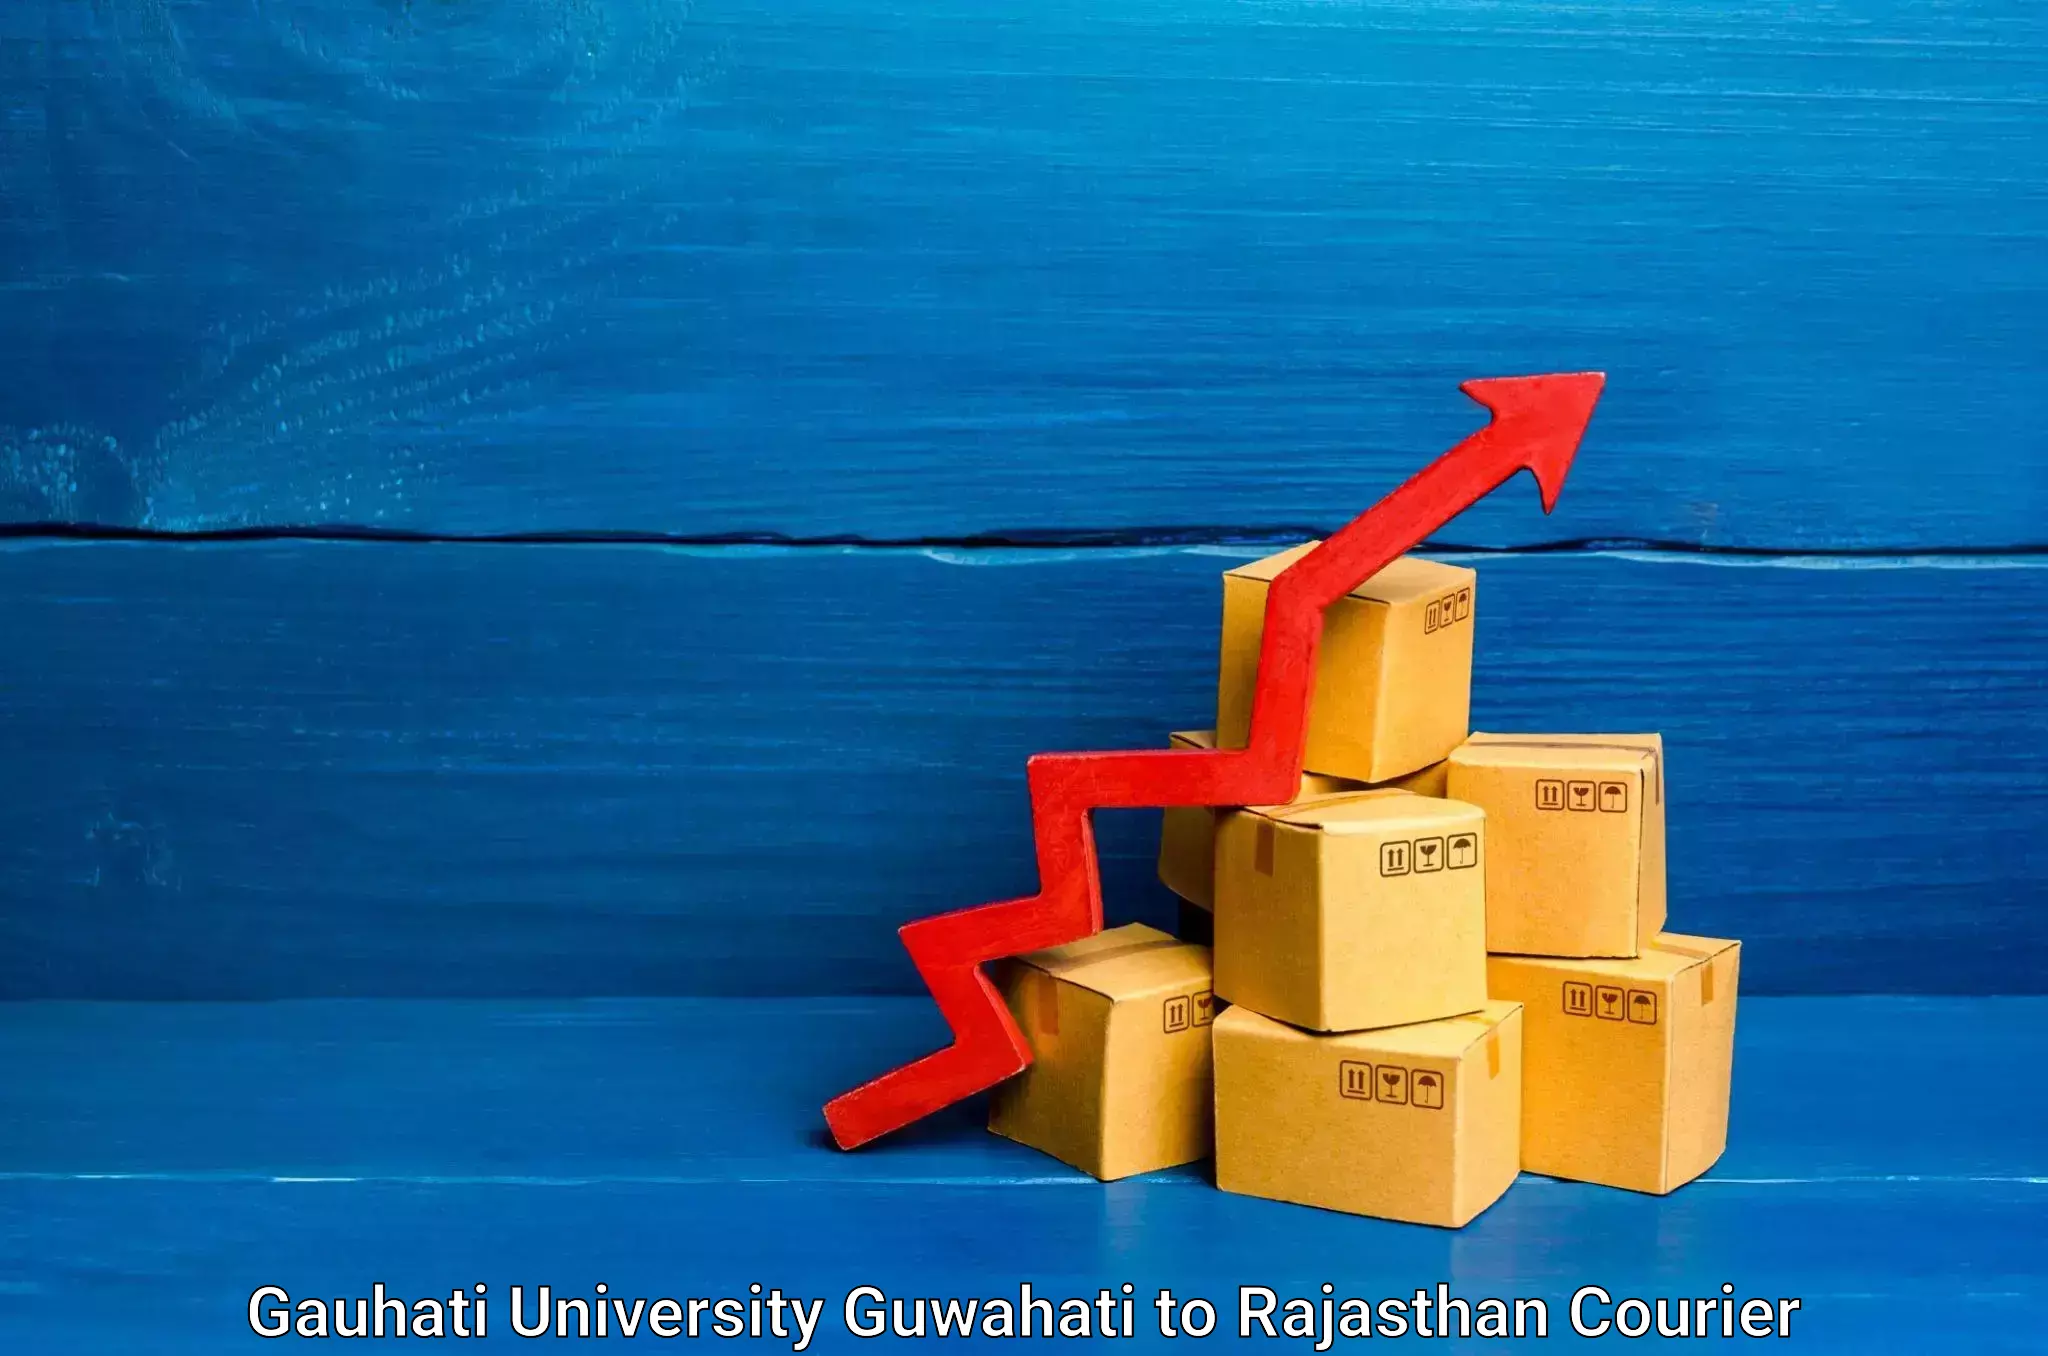 Express postal services Gauhati University Guwahati to Ajmer